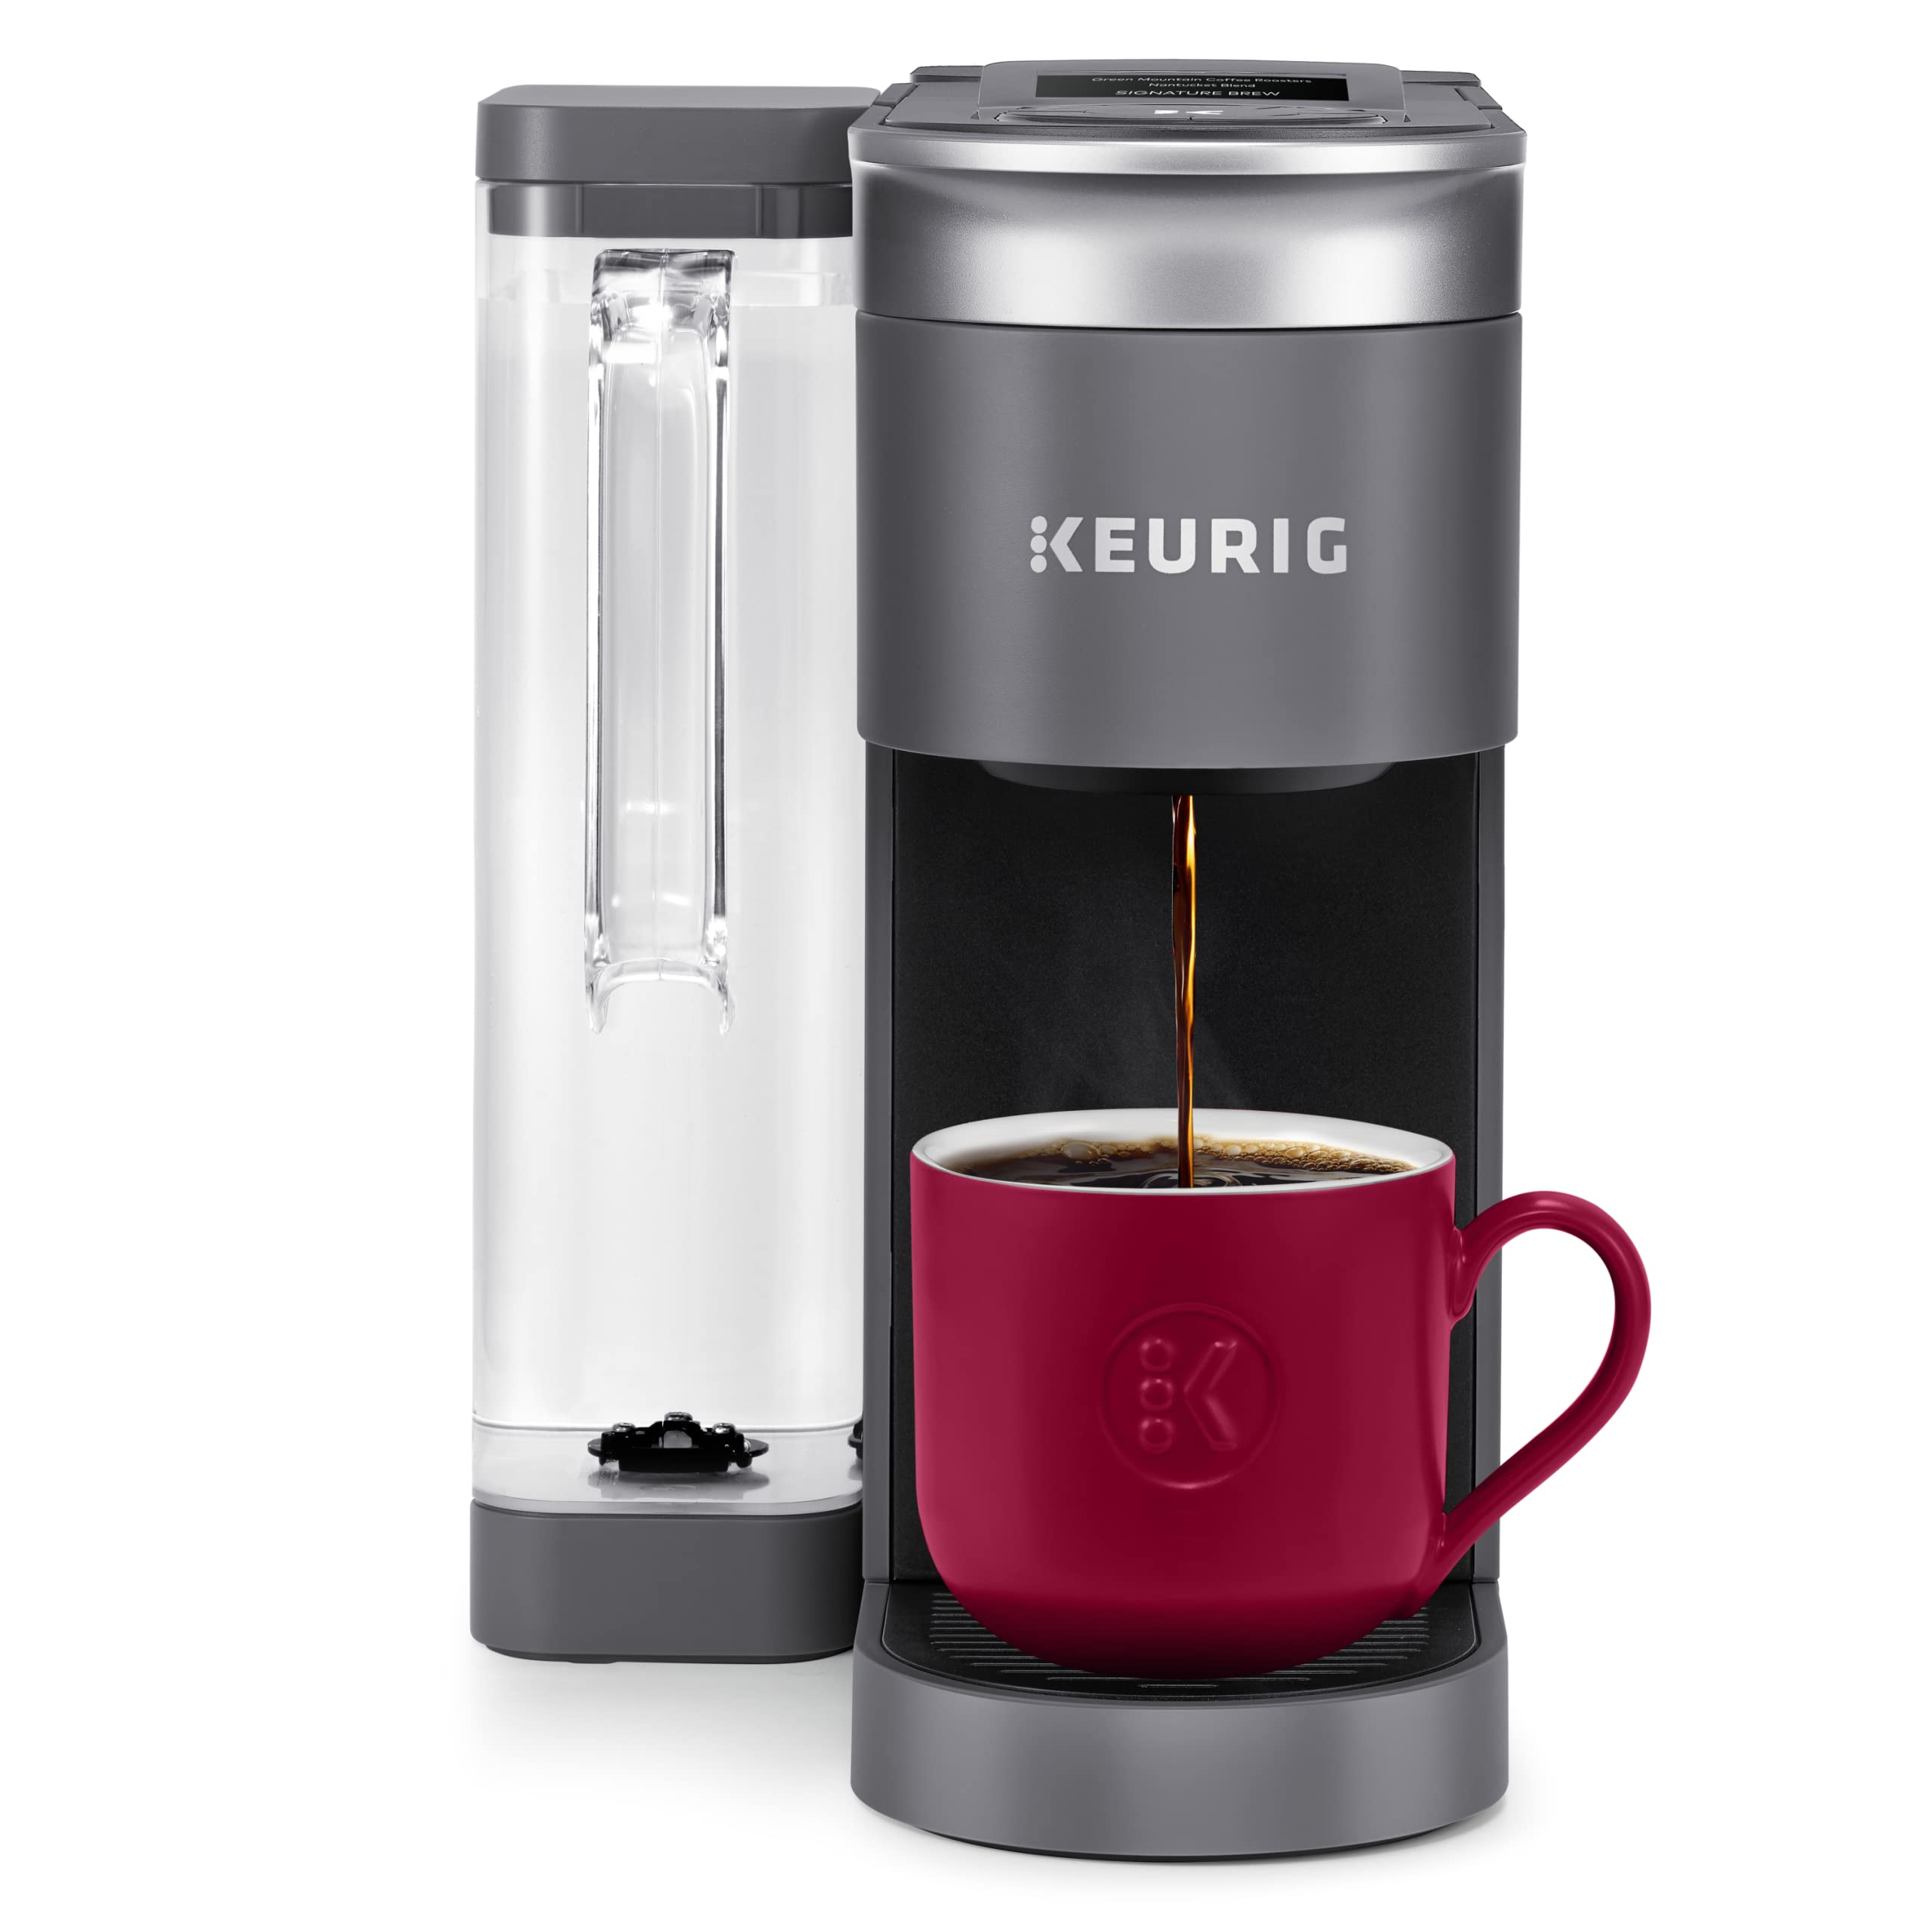 Keurig K-Supreme SMART Coffee Maker, MultiStream Technology, Brews 6-12oz Cup Sizes, Gray